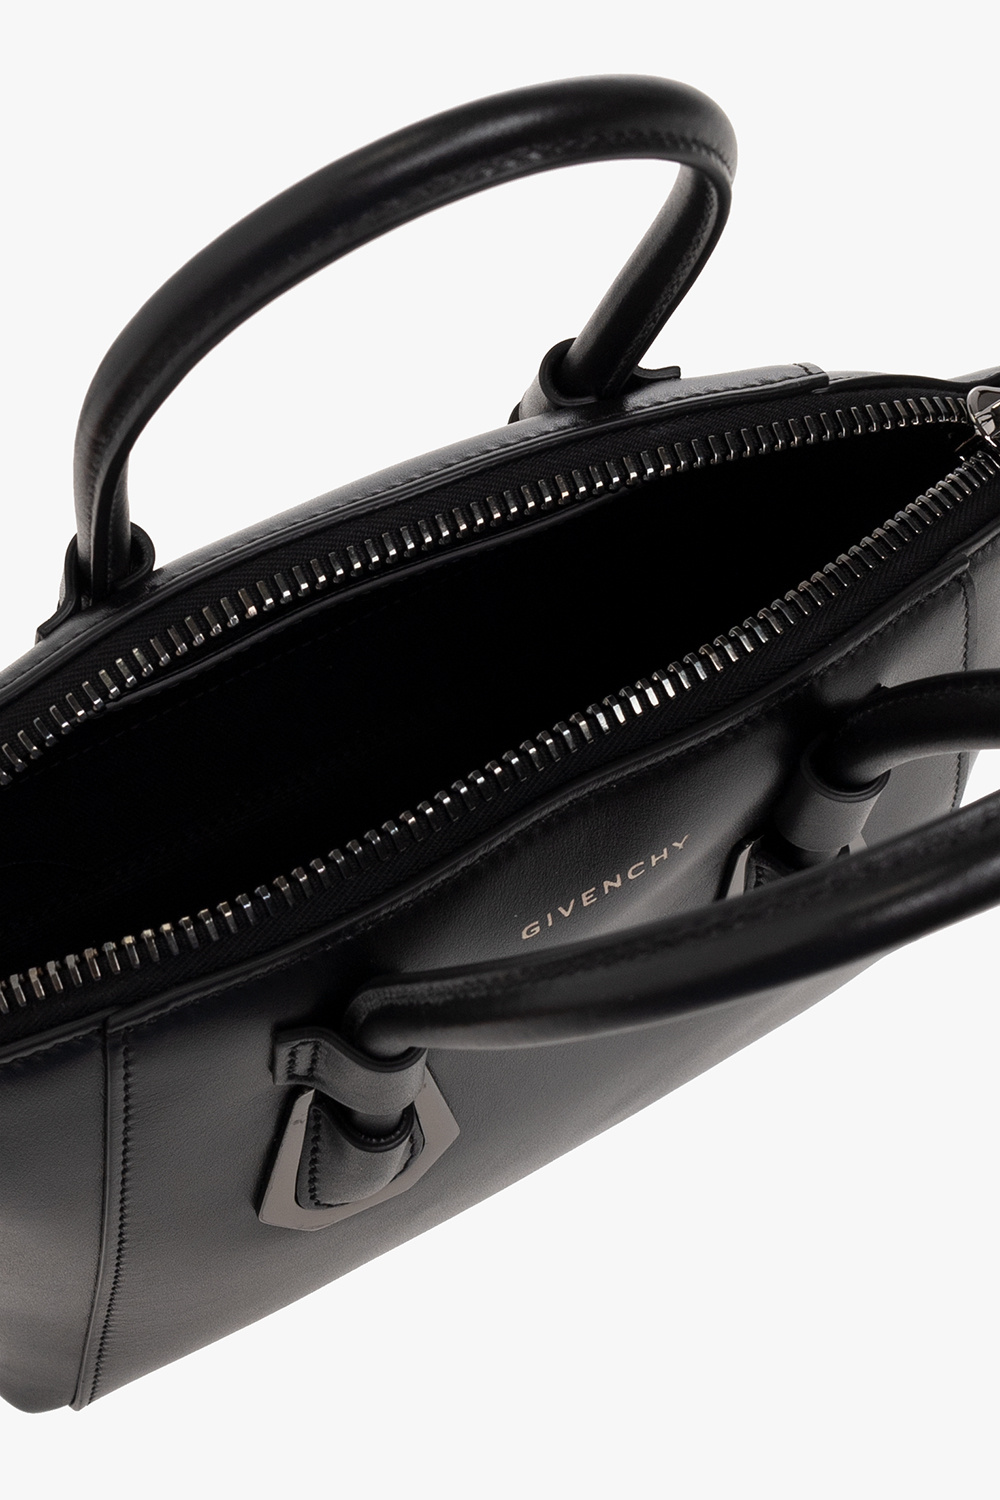 IetpShops TC - 'Antigona Sport Mini' shoulder bag Pre-Owned Givenchy - Pre-Owned  Givenchy Chain-Embellished Loafer